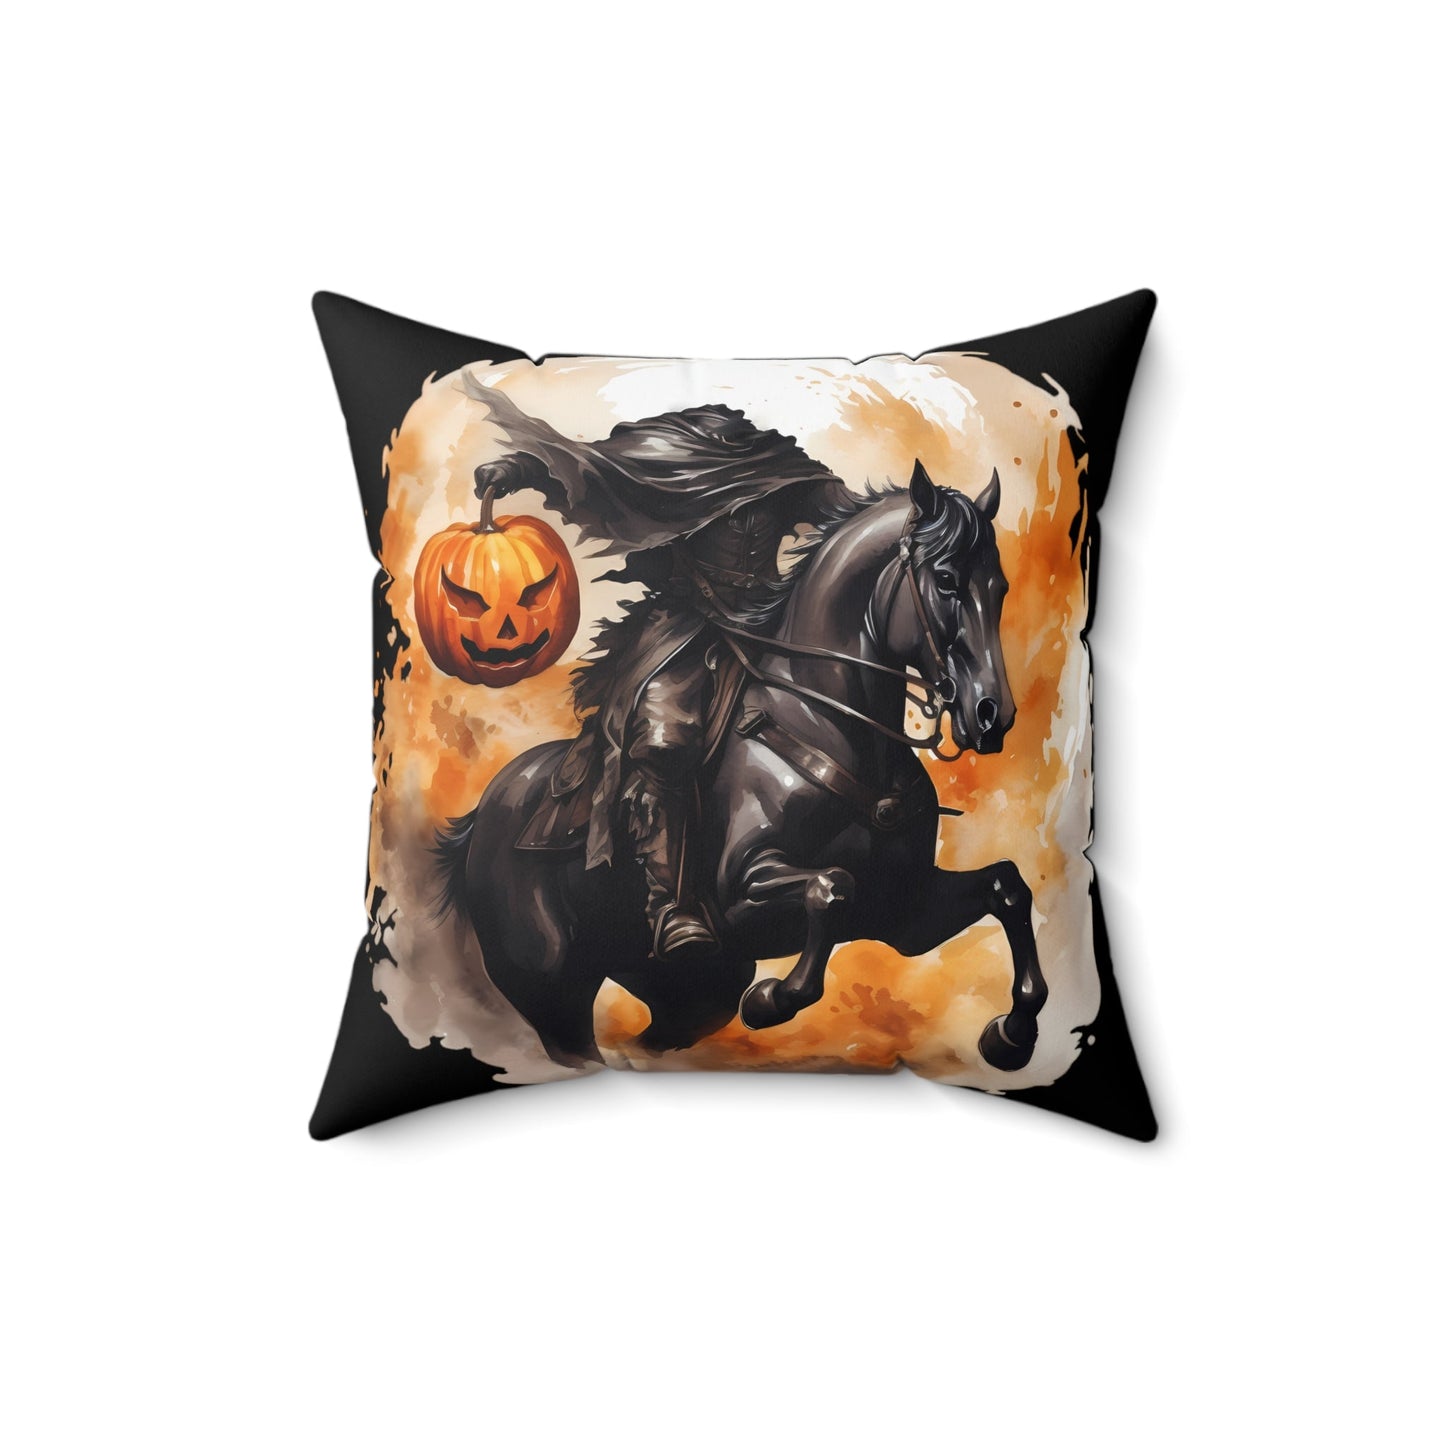 Headless Horseman Pumpkin Head Square Throw PillowHome DecorVTZdesigns16" × 16"All Over PrintAOPBed